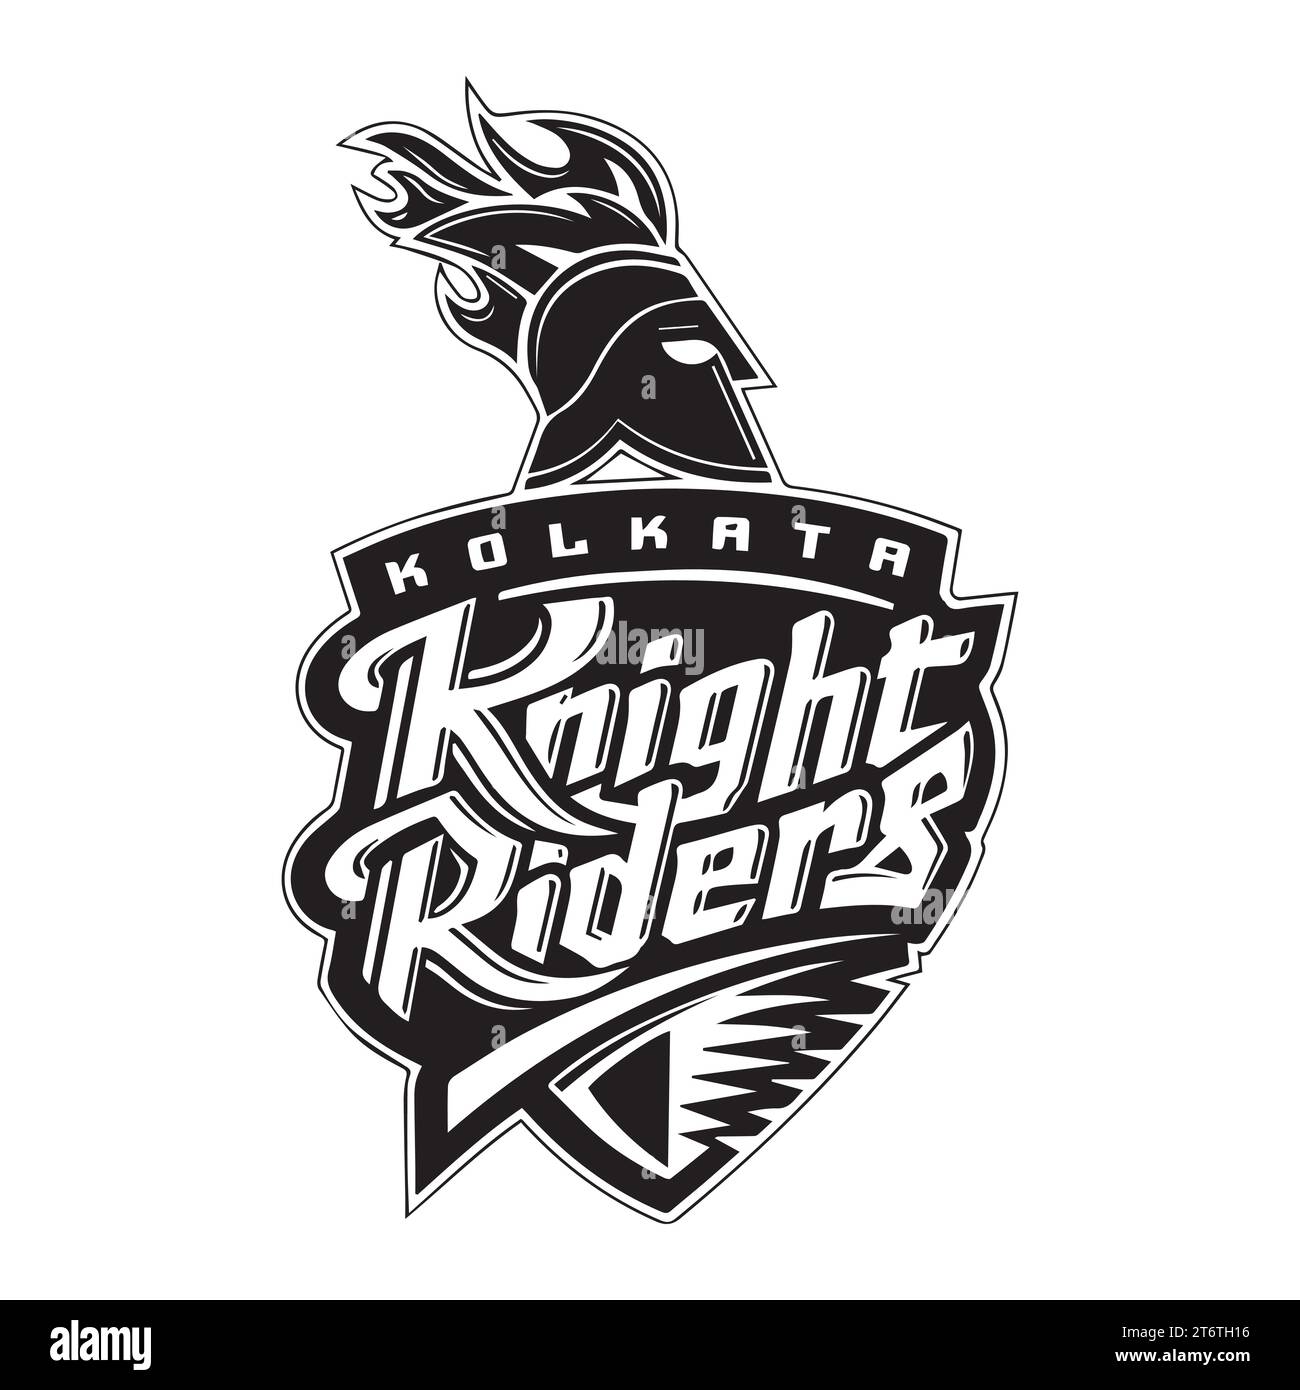 Kolkata Knight Riders Logo Black Style Indian professional Cricket club, Vector Illustration Abstract Editable image Stock Vector